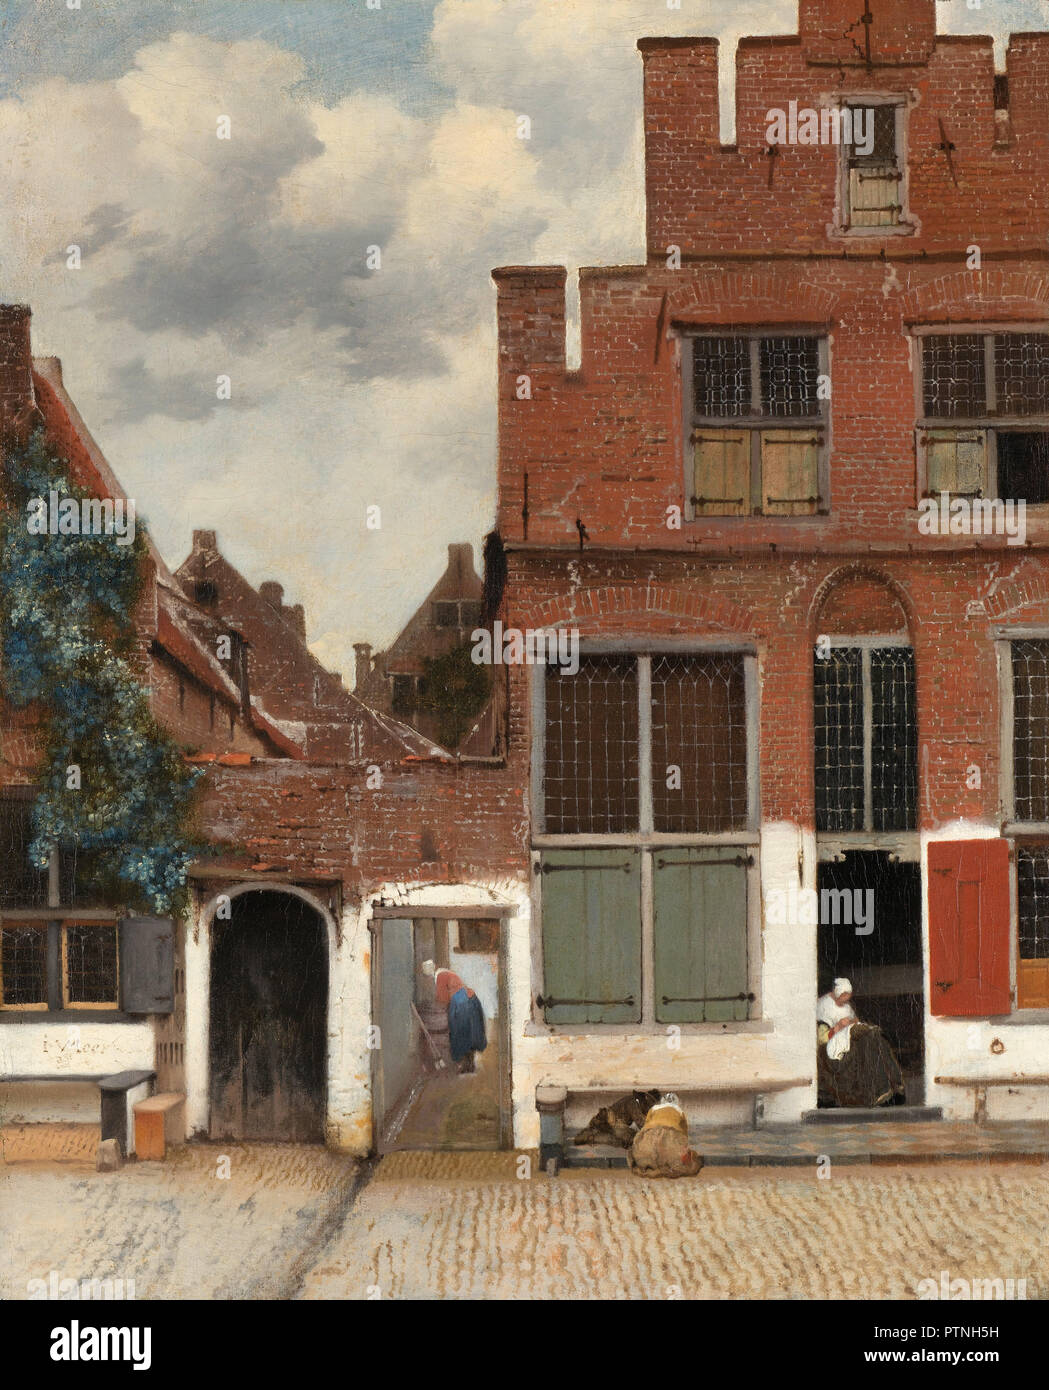 Gezicht op huizen in Delft, bekend als 'Het straatje' / View of Houses in Delft, known as 'The little Street'. Date/Period: Ca. 1658. Painting. Oil on canvas. Height: 54.3 cm (21.3 in); Width: 44 cm (17.3 in). Author: JOHANNES VERMEER. VERMEER, JOHANNES. JAN VERMEER. Vermeer, Jan (Johannes). Stock Photo